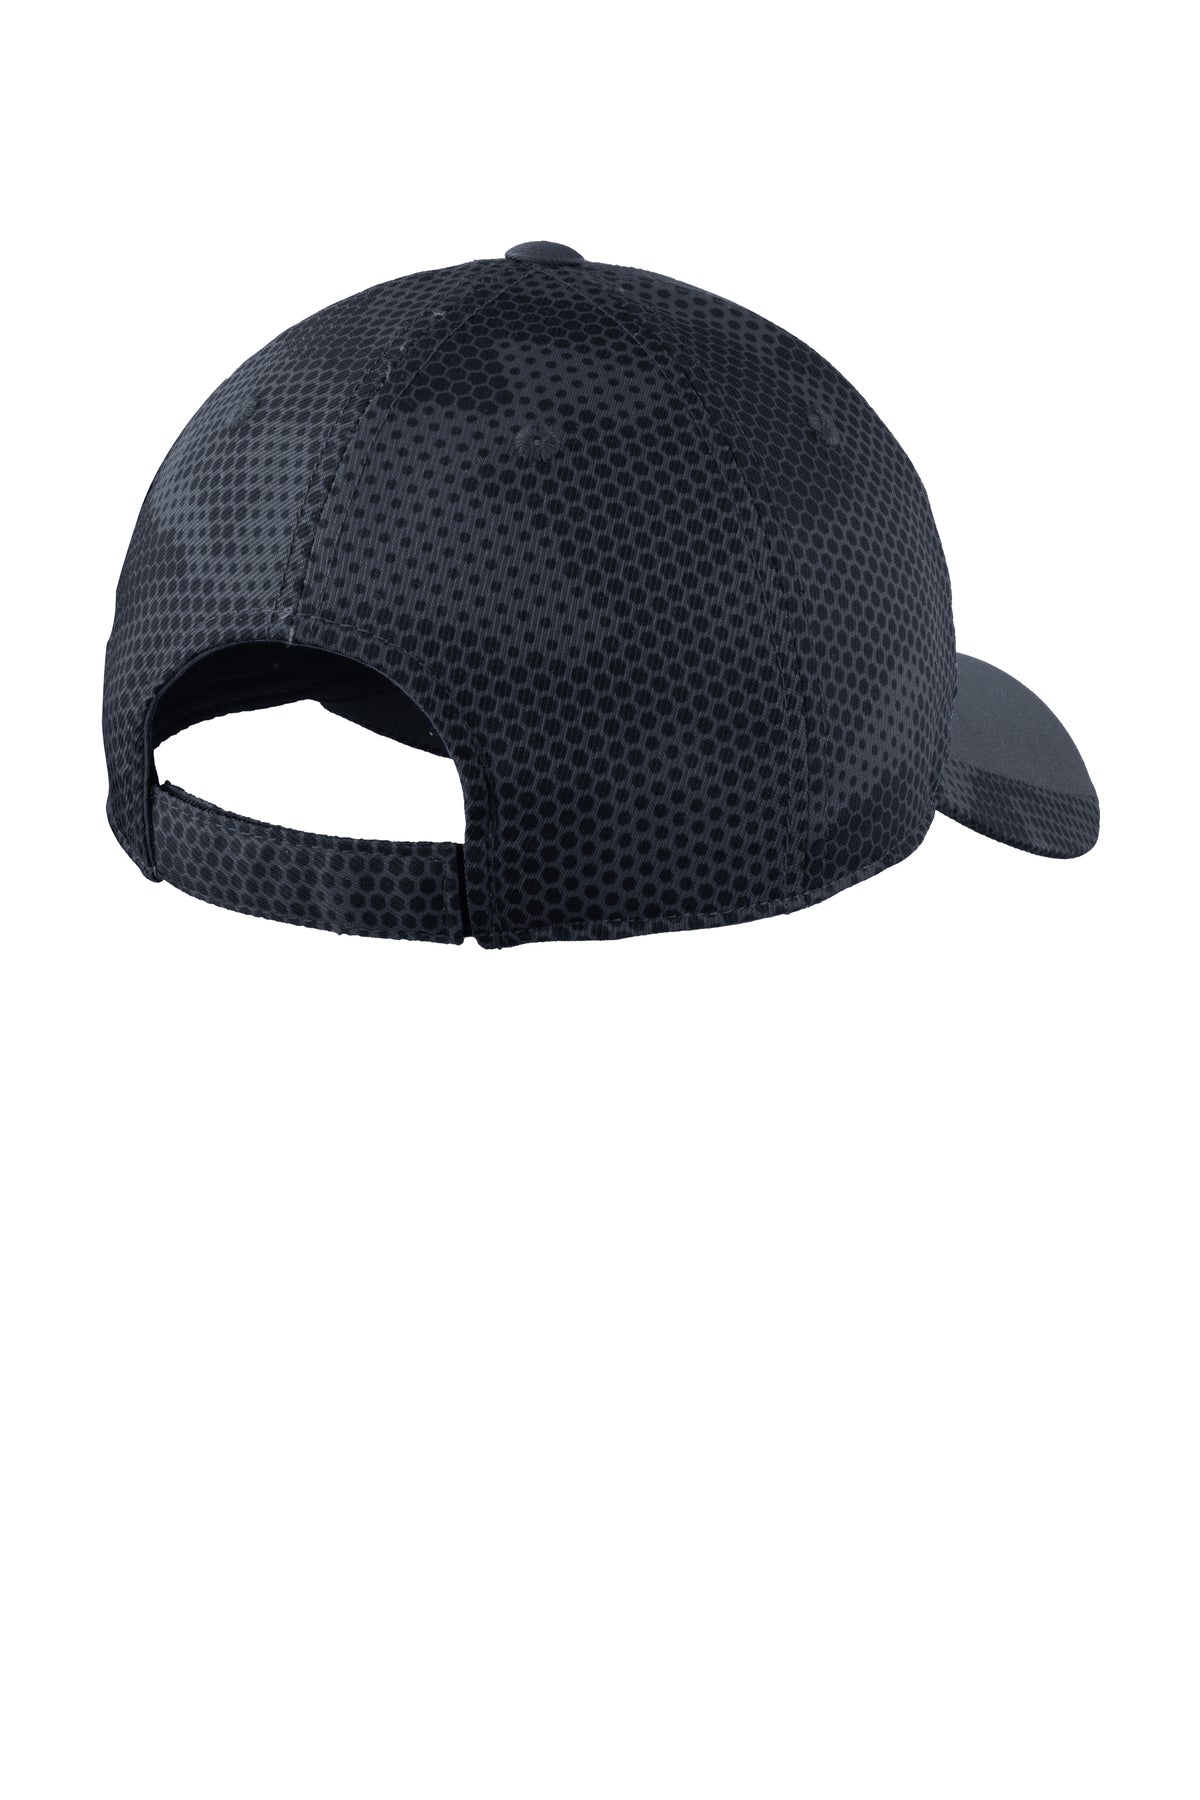 Sport-Tek Branded CamoHex Caps, Iron Grey